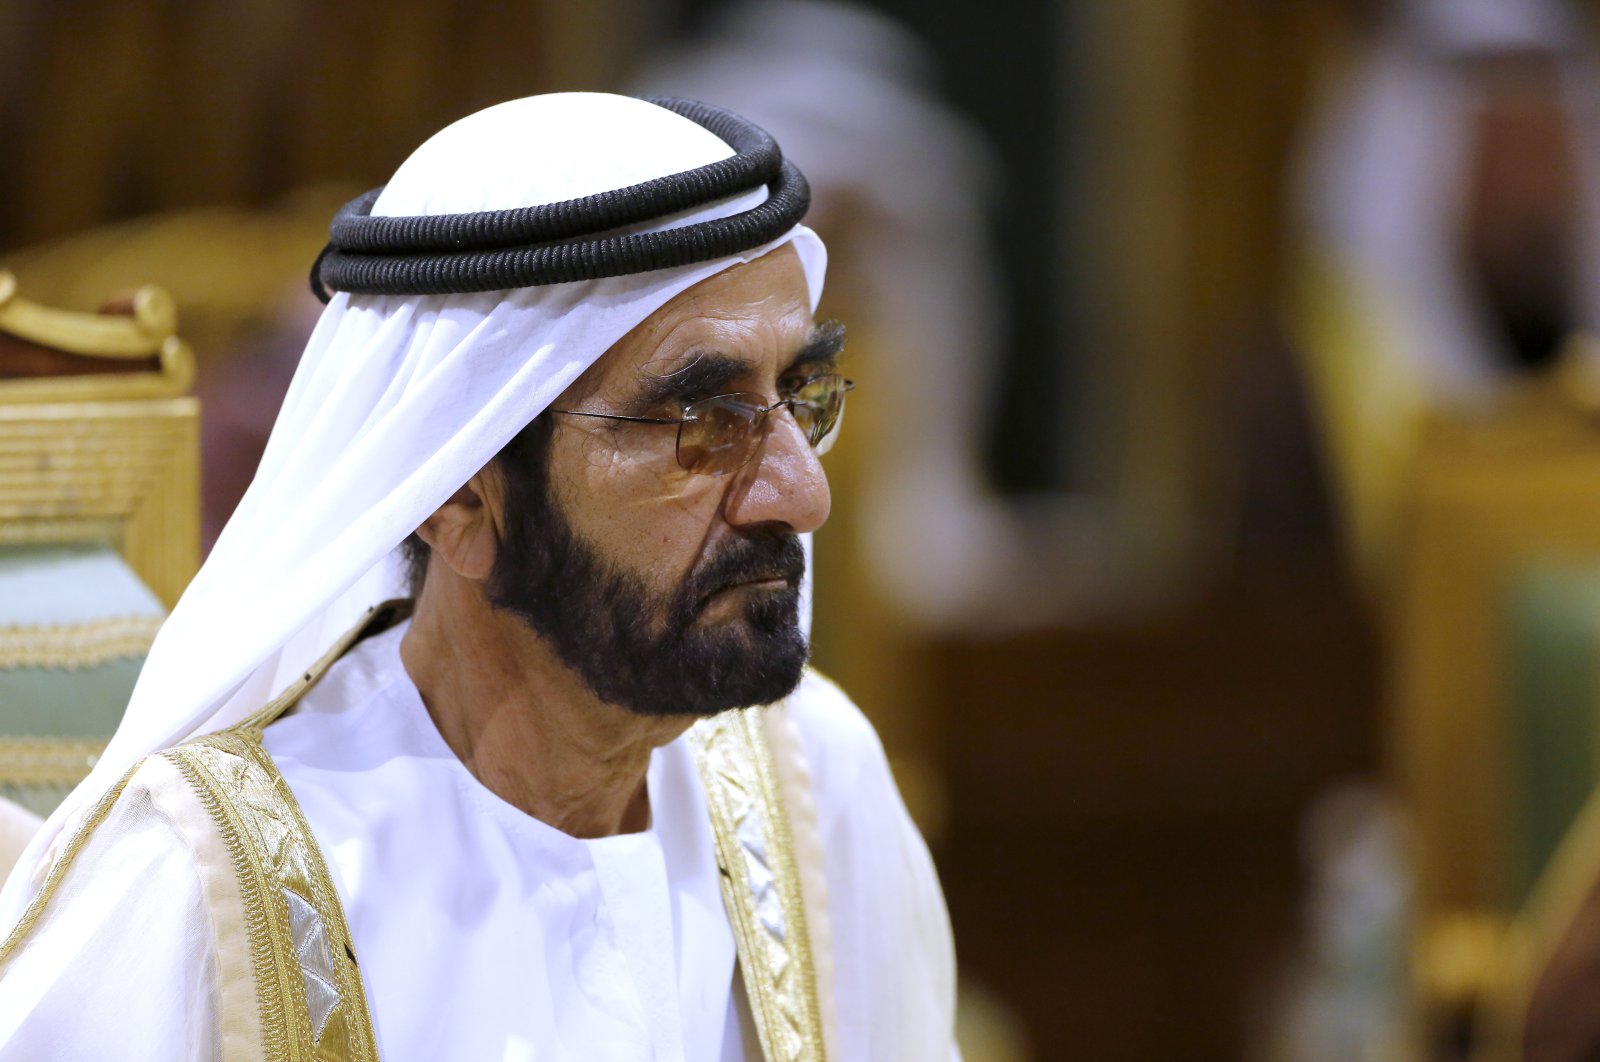 Prime Minister of the United Arab Emirates Sheikh Mohammed bin Rashid Al Maktoum attends the 40th Gulf Cooperation Council Summit in Riyadh, Saudi Arabia, Dec. 10, 2019. (AP Photo)